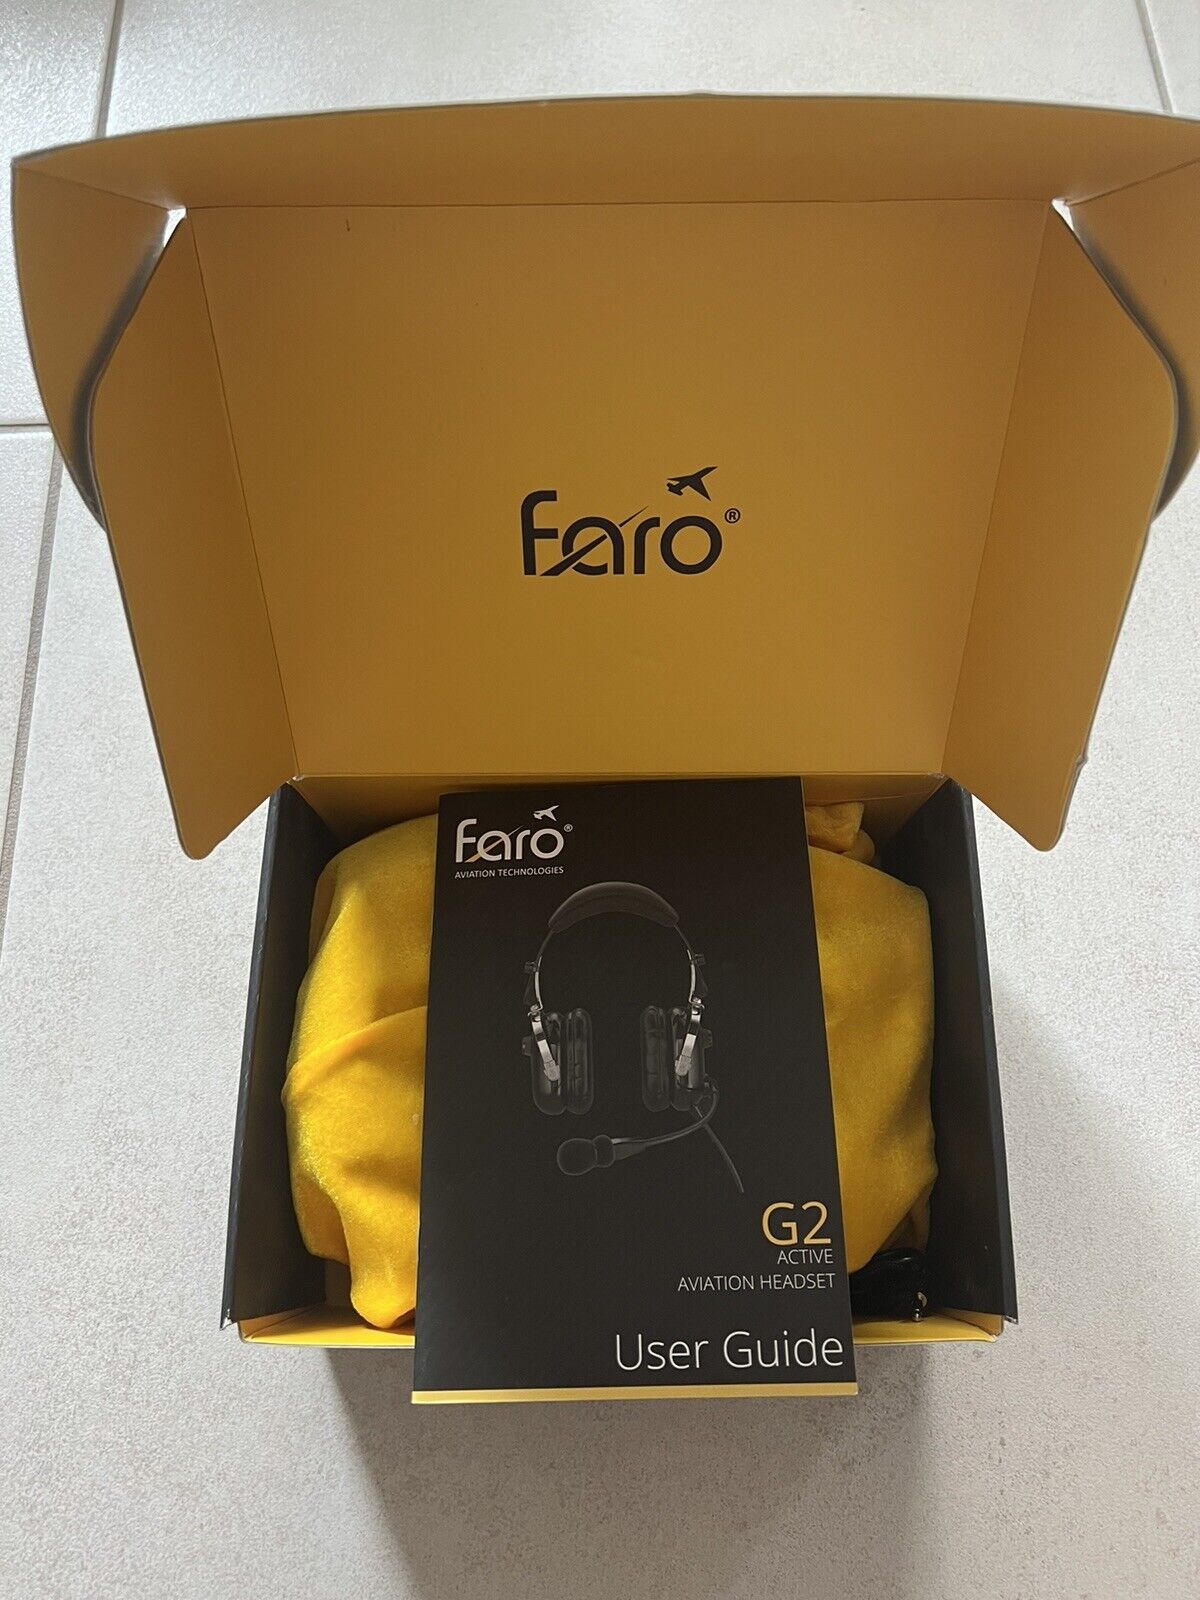 FARO G2 ANR (Active) Aviation Headset